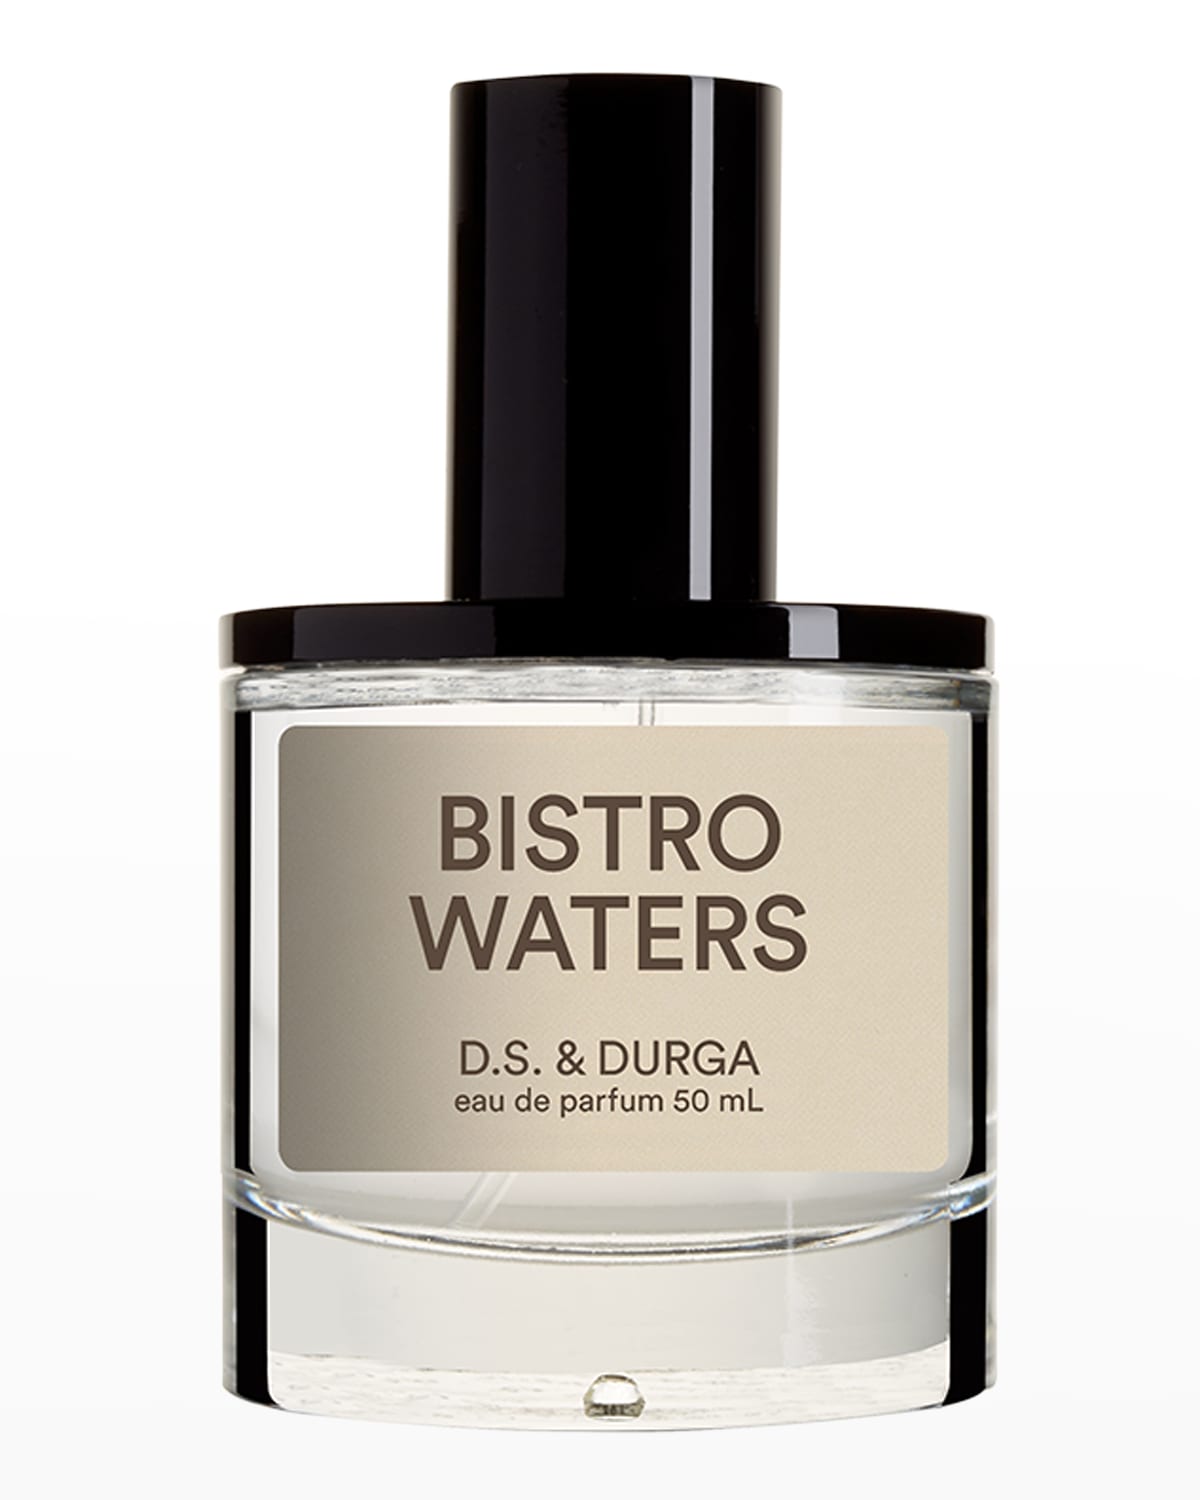 Bistro Waters Eau de Parfum, 1.7 oz.